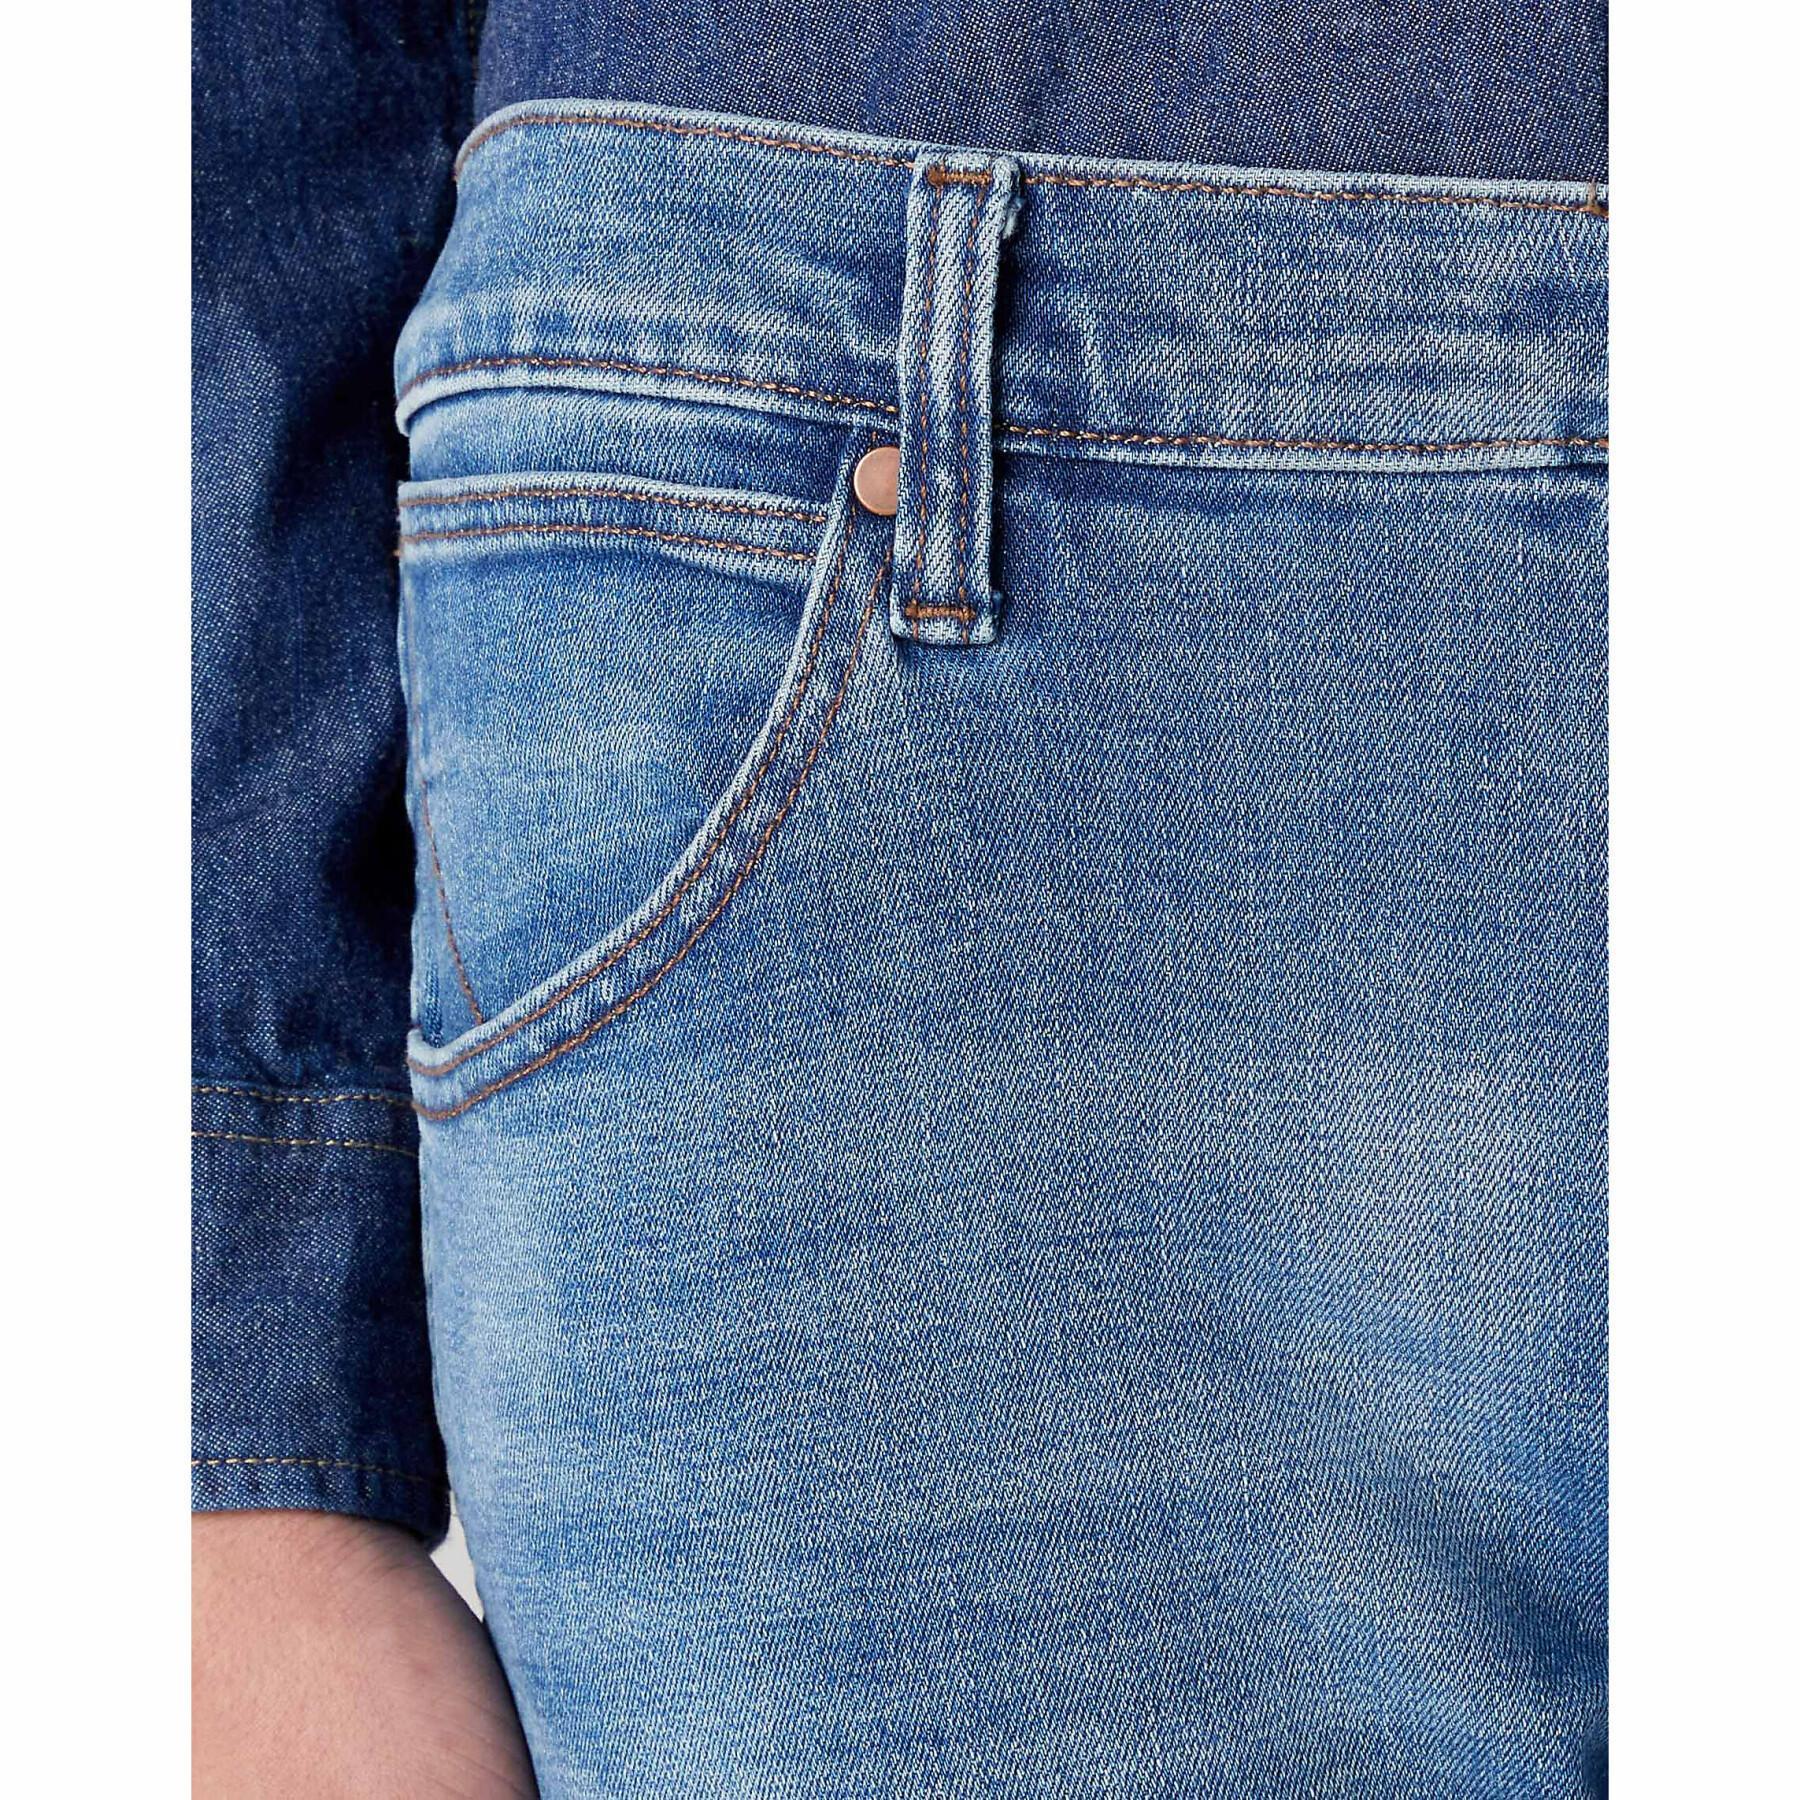 Jeans stretch Wrangler Larston Medium